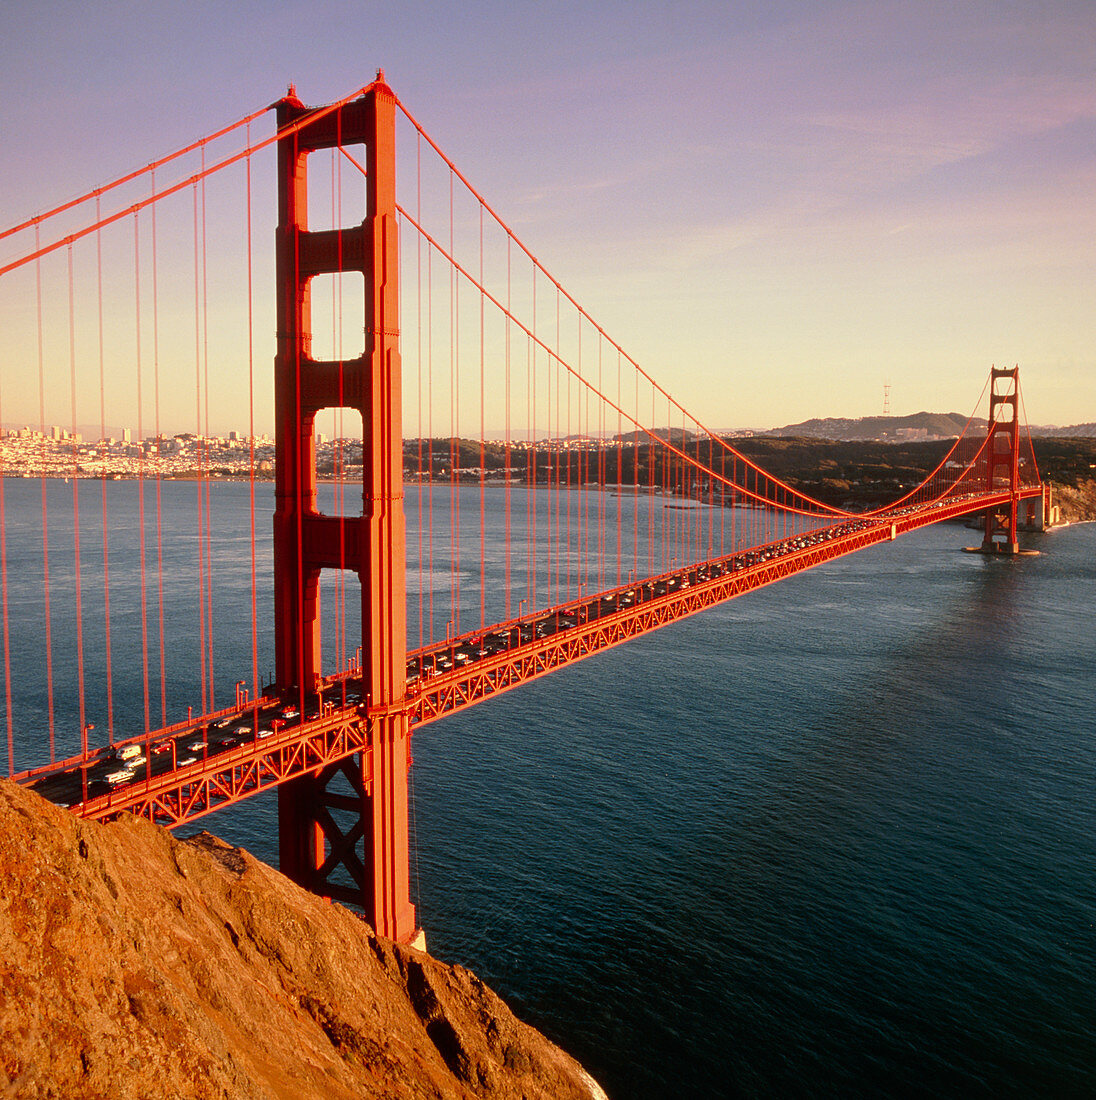 View of the Golden Gate Bridge,San Francisco Bay